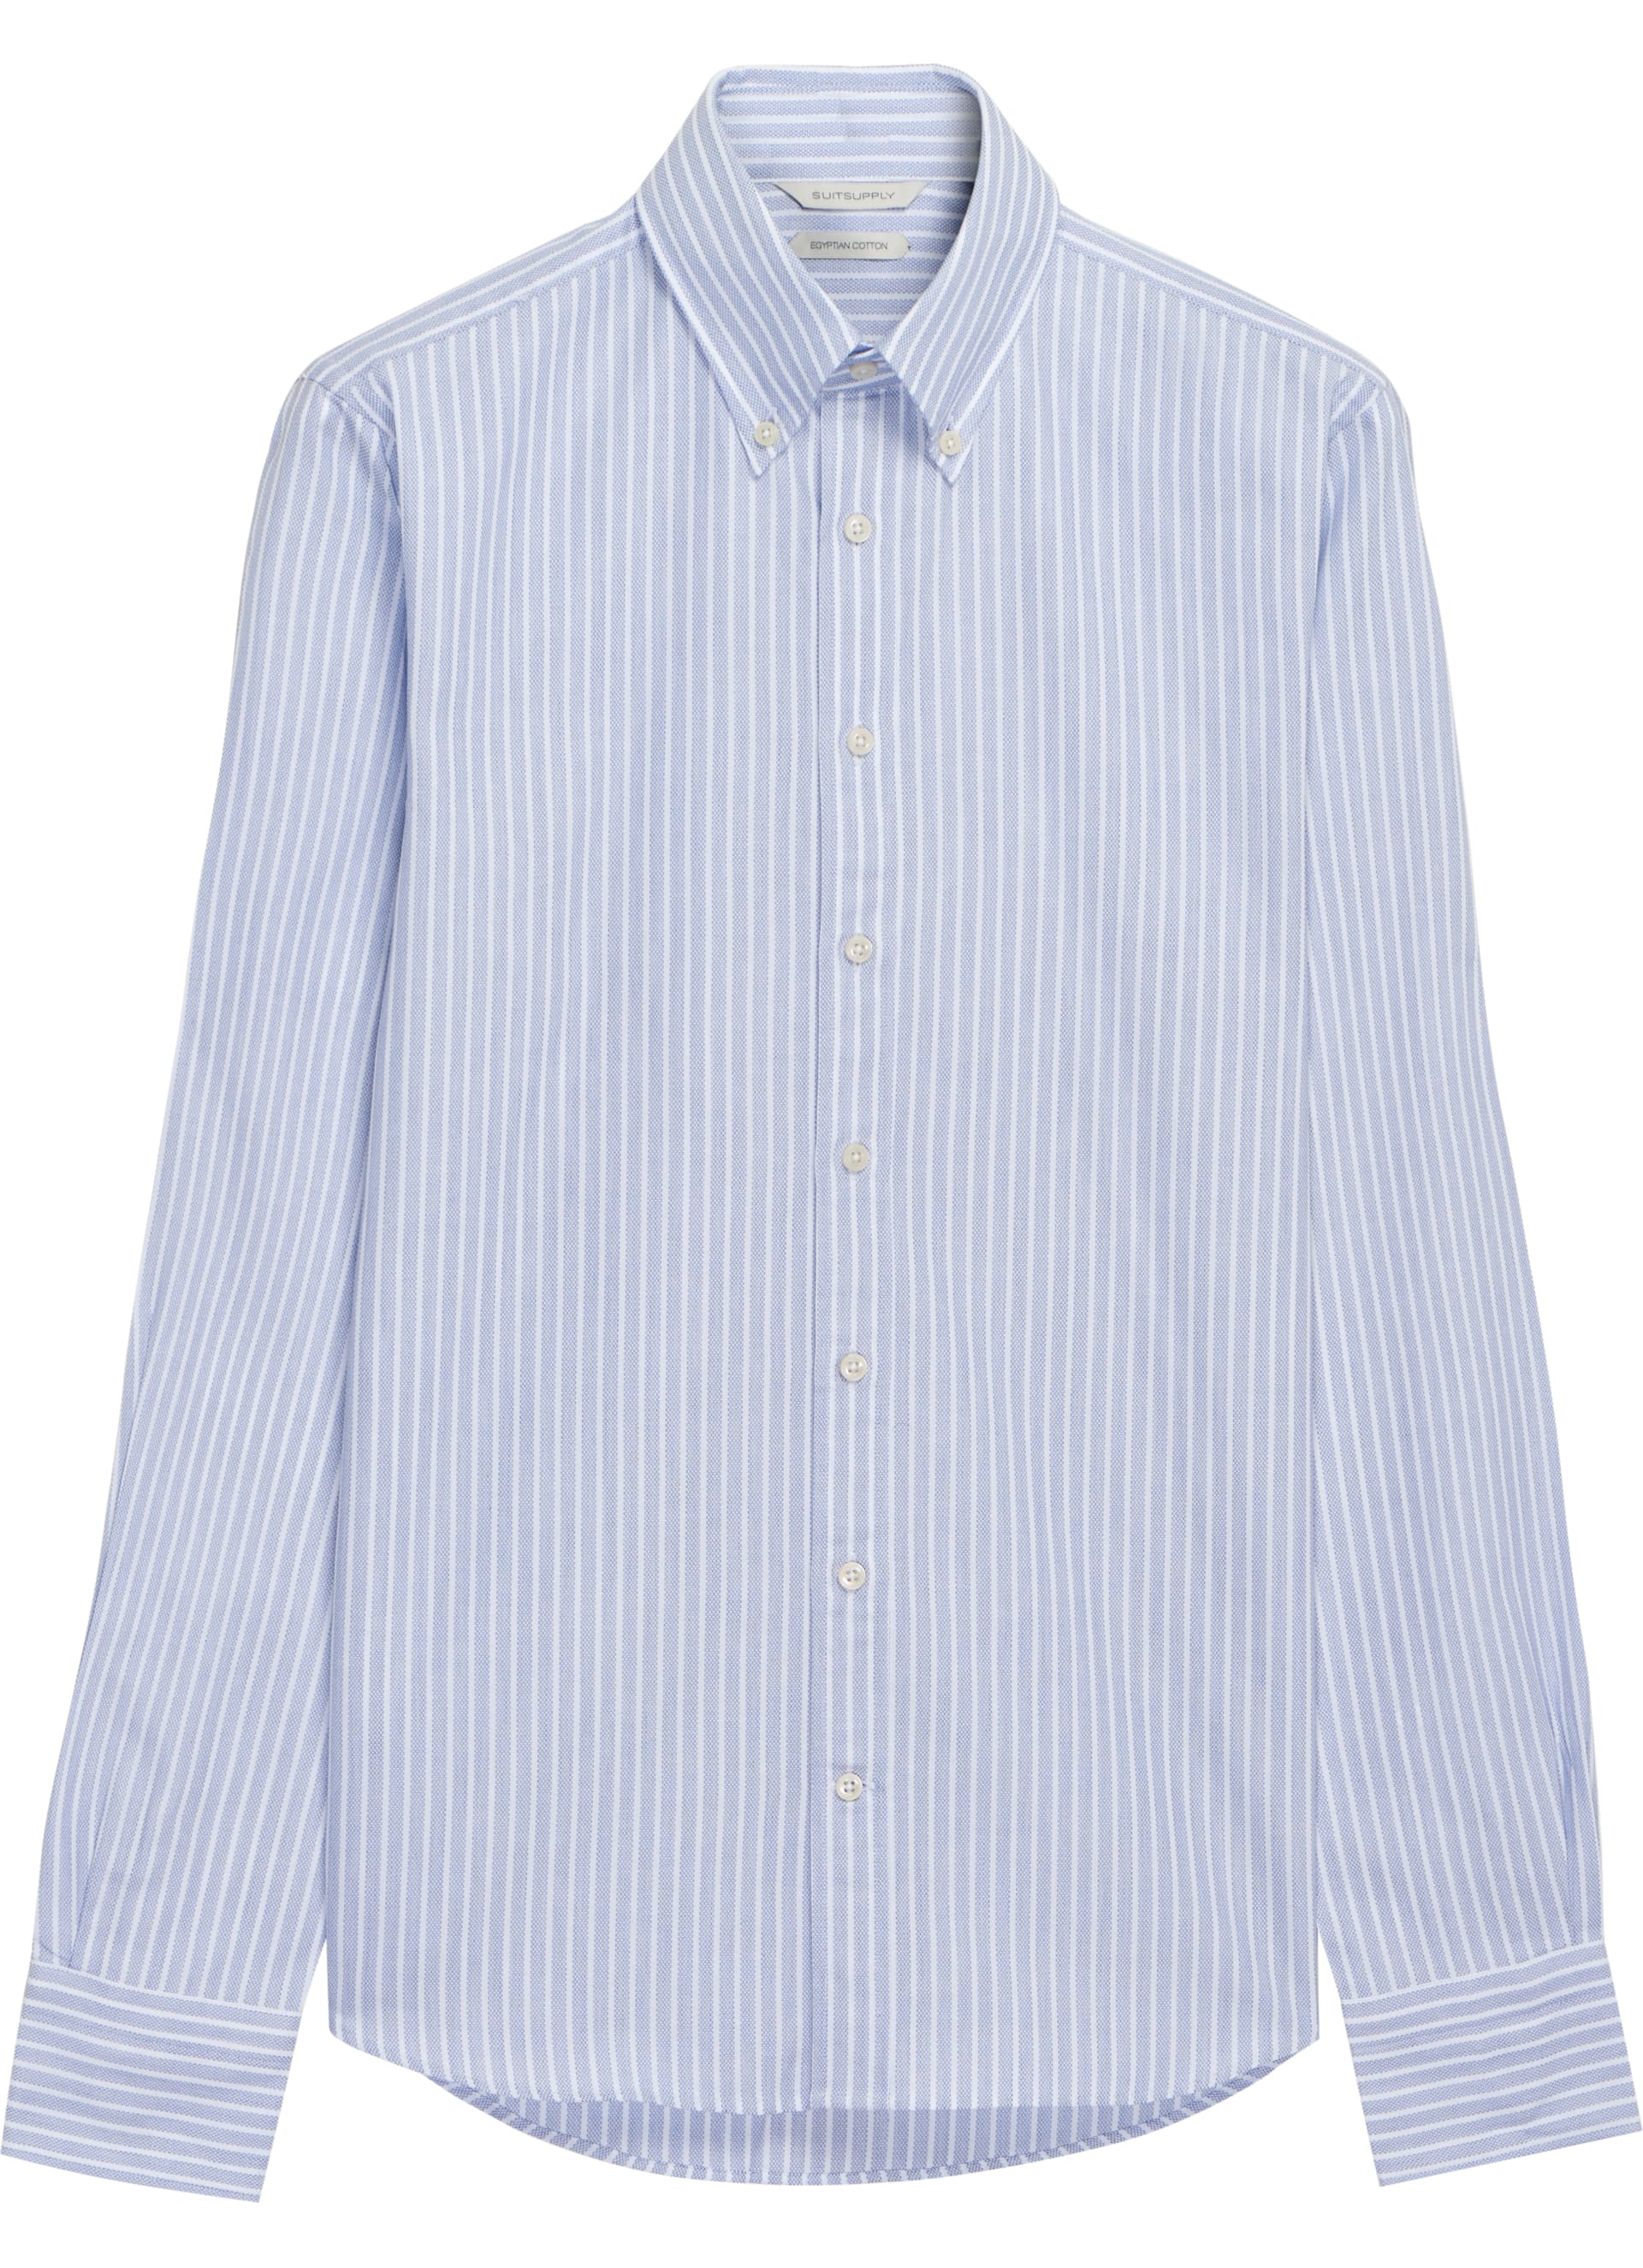 Navy Stripe Shirt Single Cuff H5815u | Suitsupply Online Store